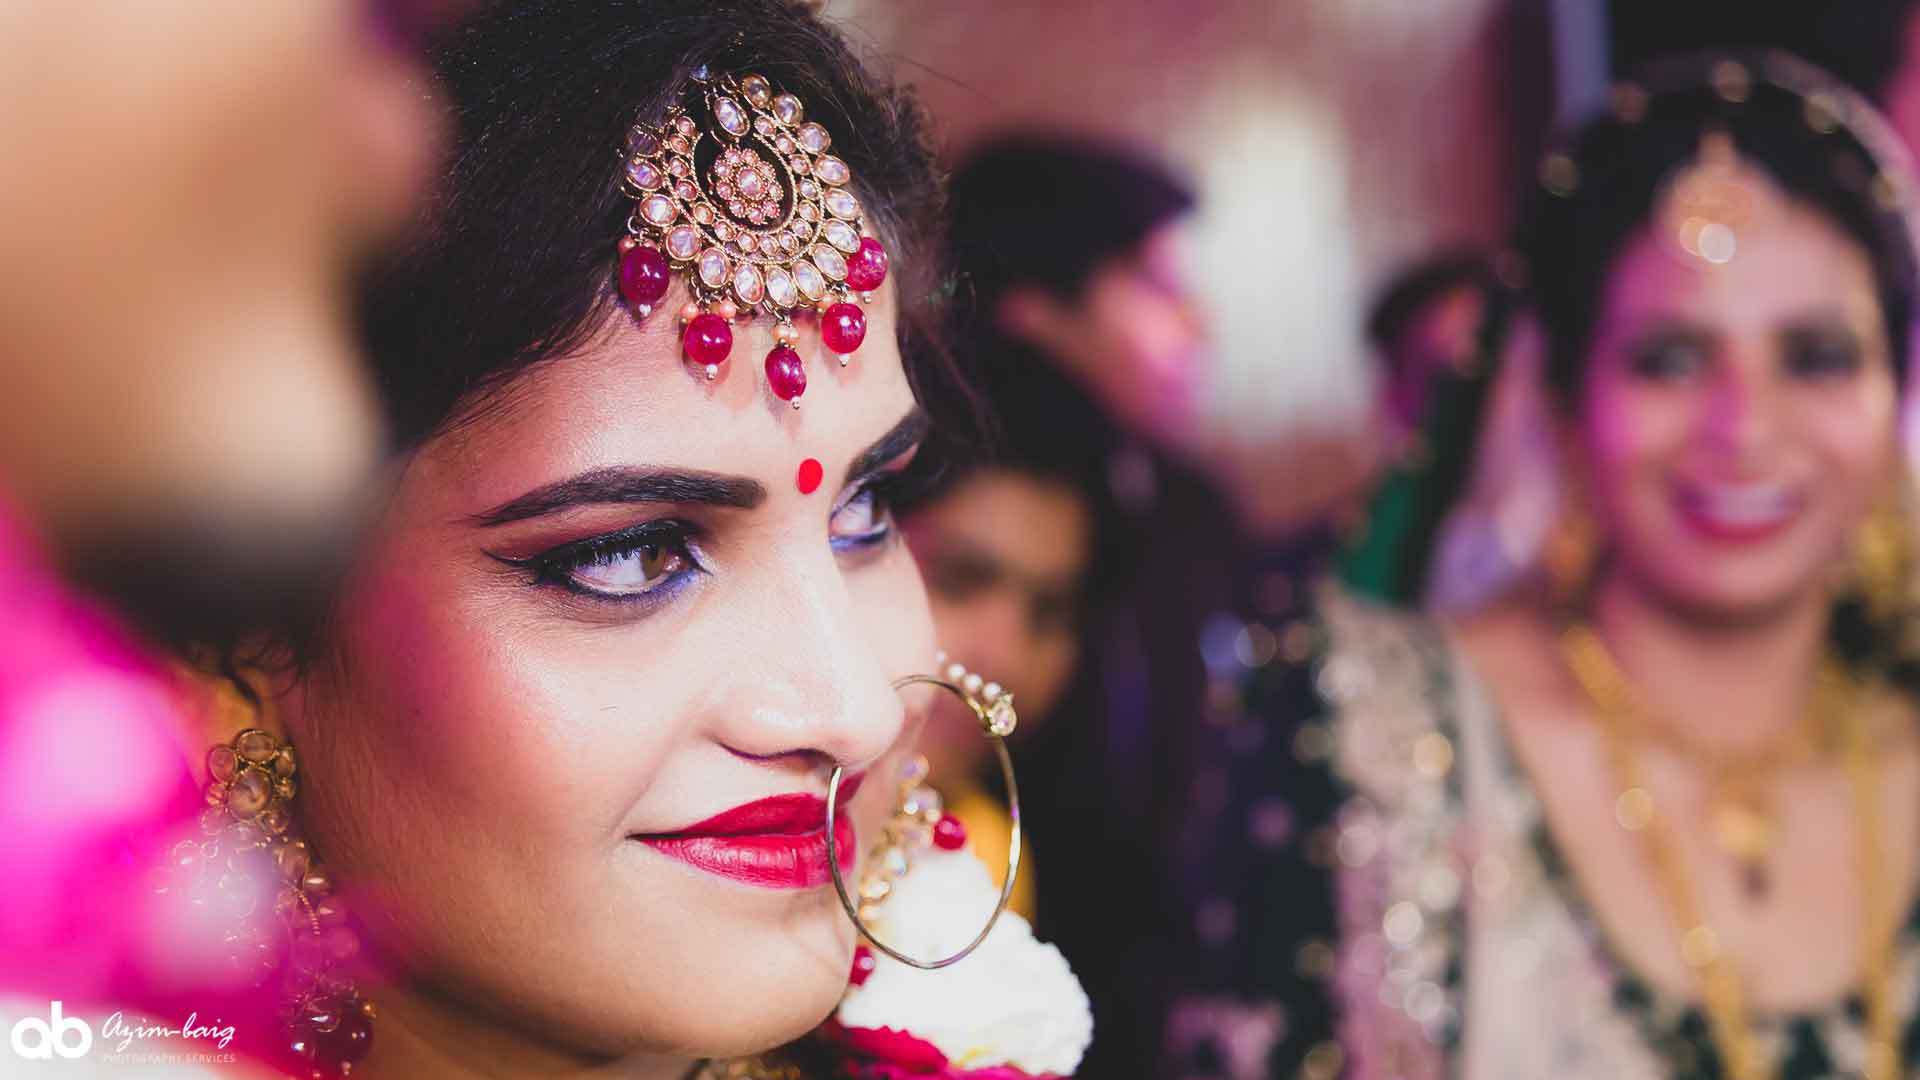 Wedding Photographer Delhi Noida NCR || Framographer Inc